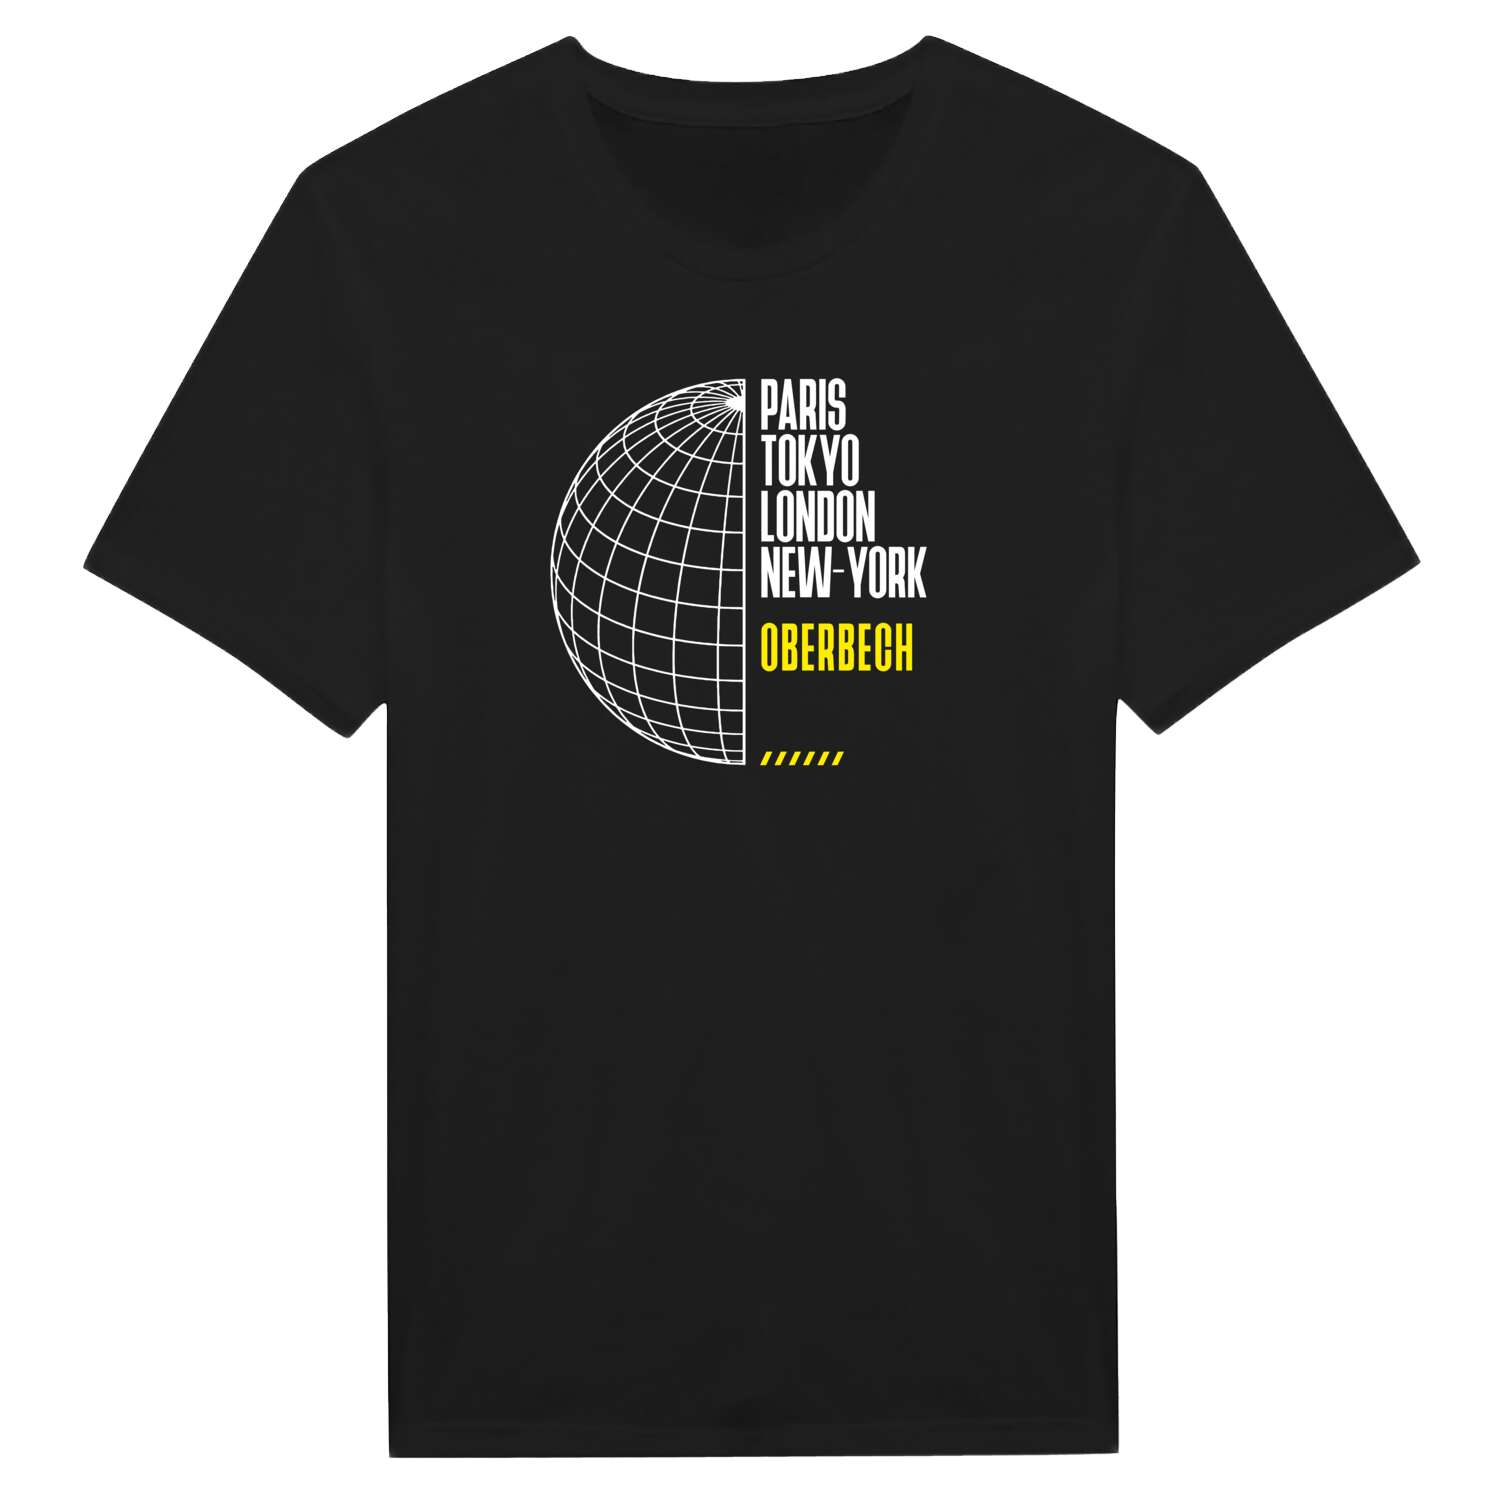 Oberbech T-Shirt »Paris Tokyo London«